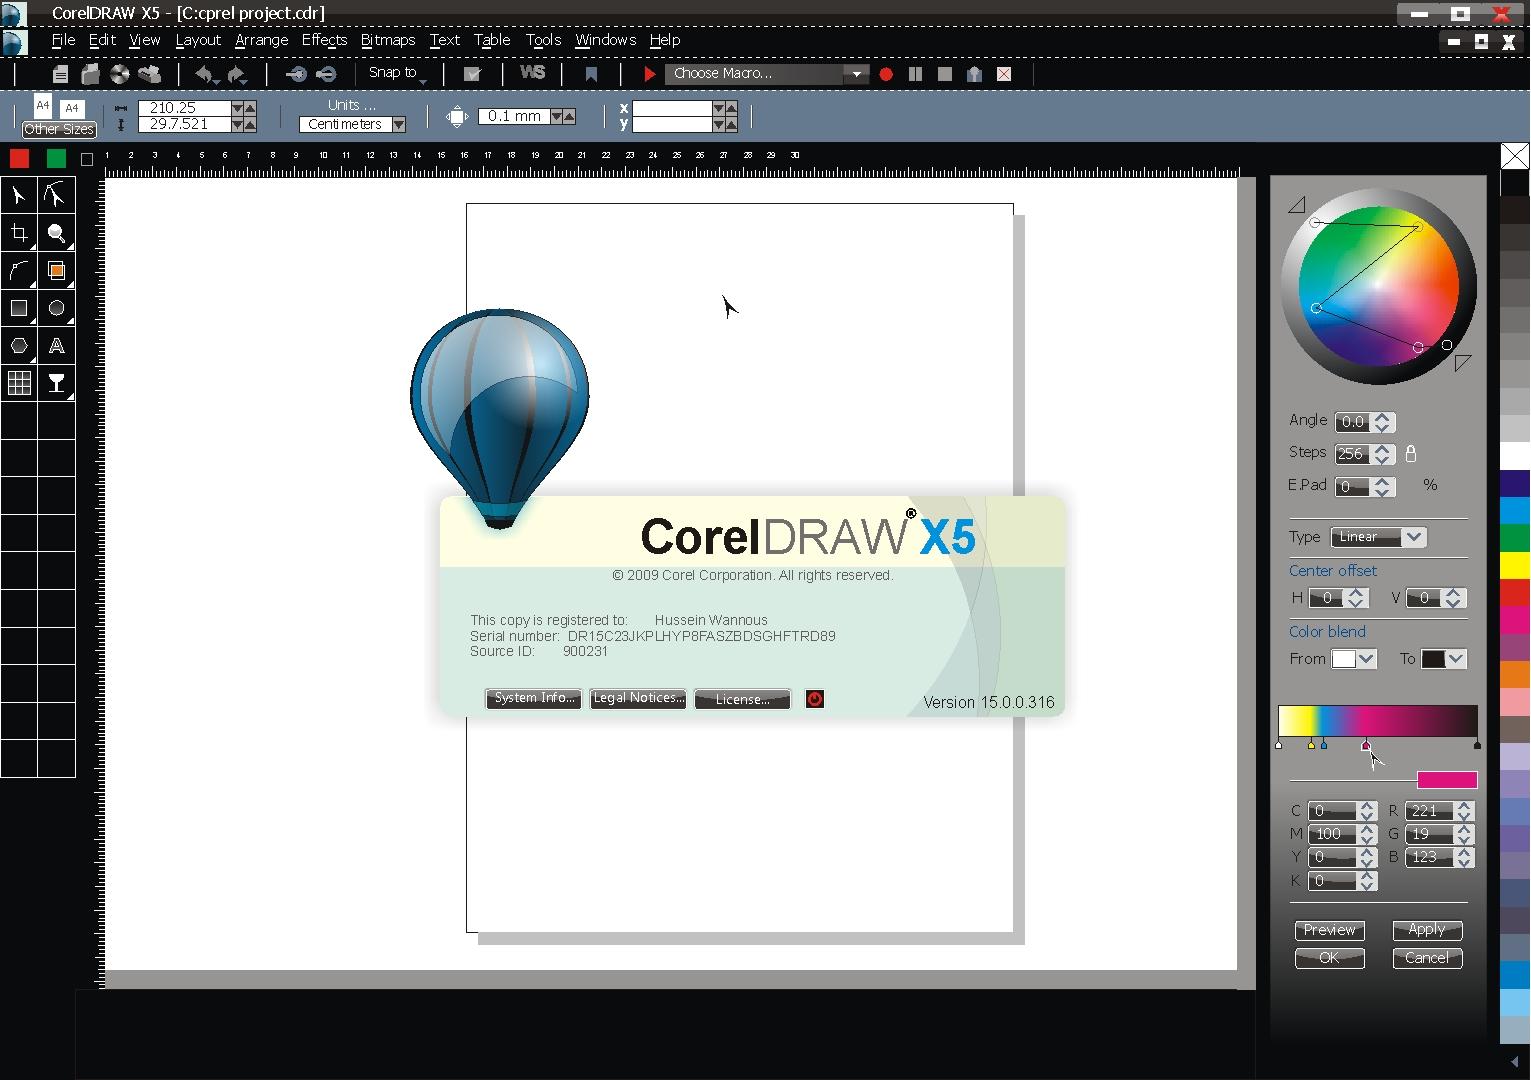 coreldraw graphics suite x5 free download full version indonesia